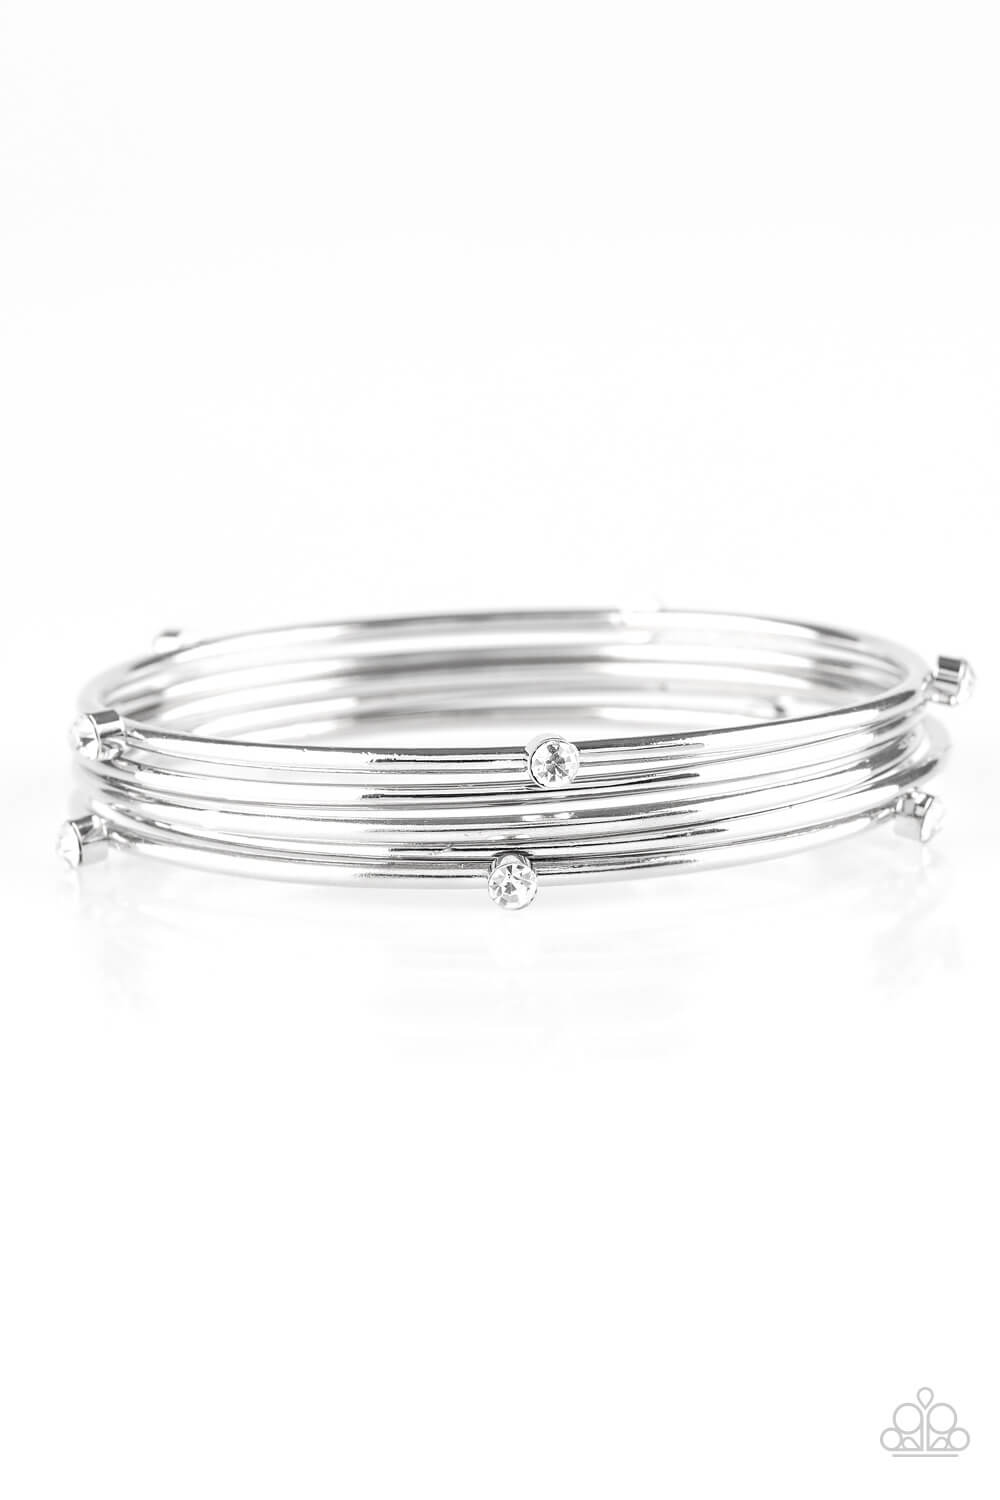 Delicate Decadence - White Bangle Bracelet Set - Princess Glam Shop